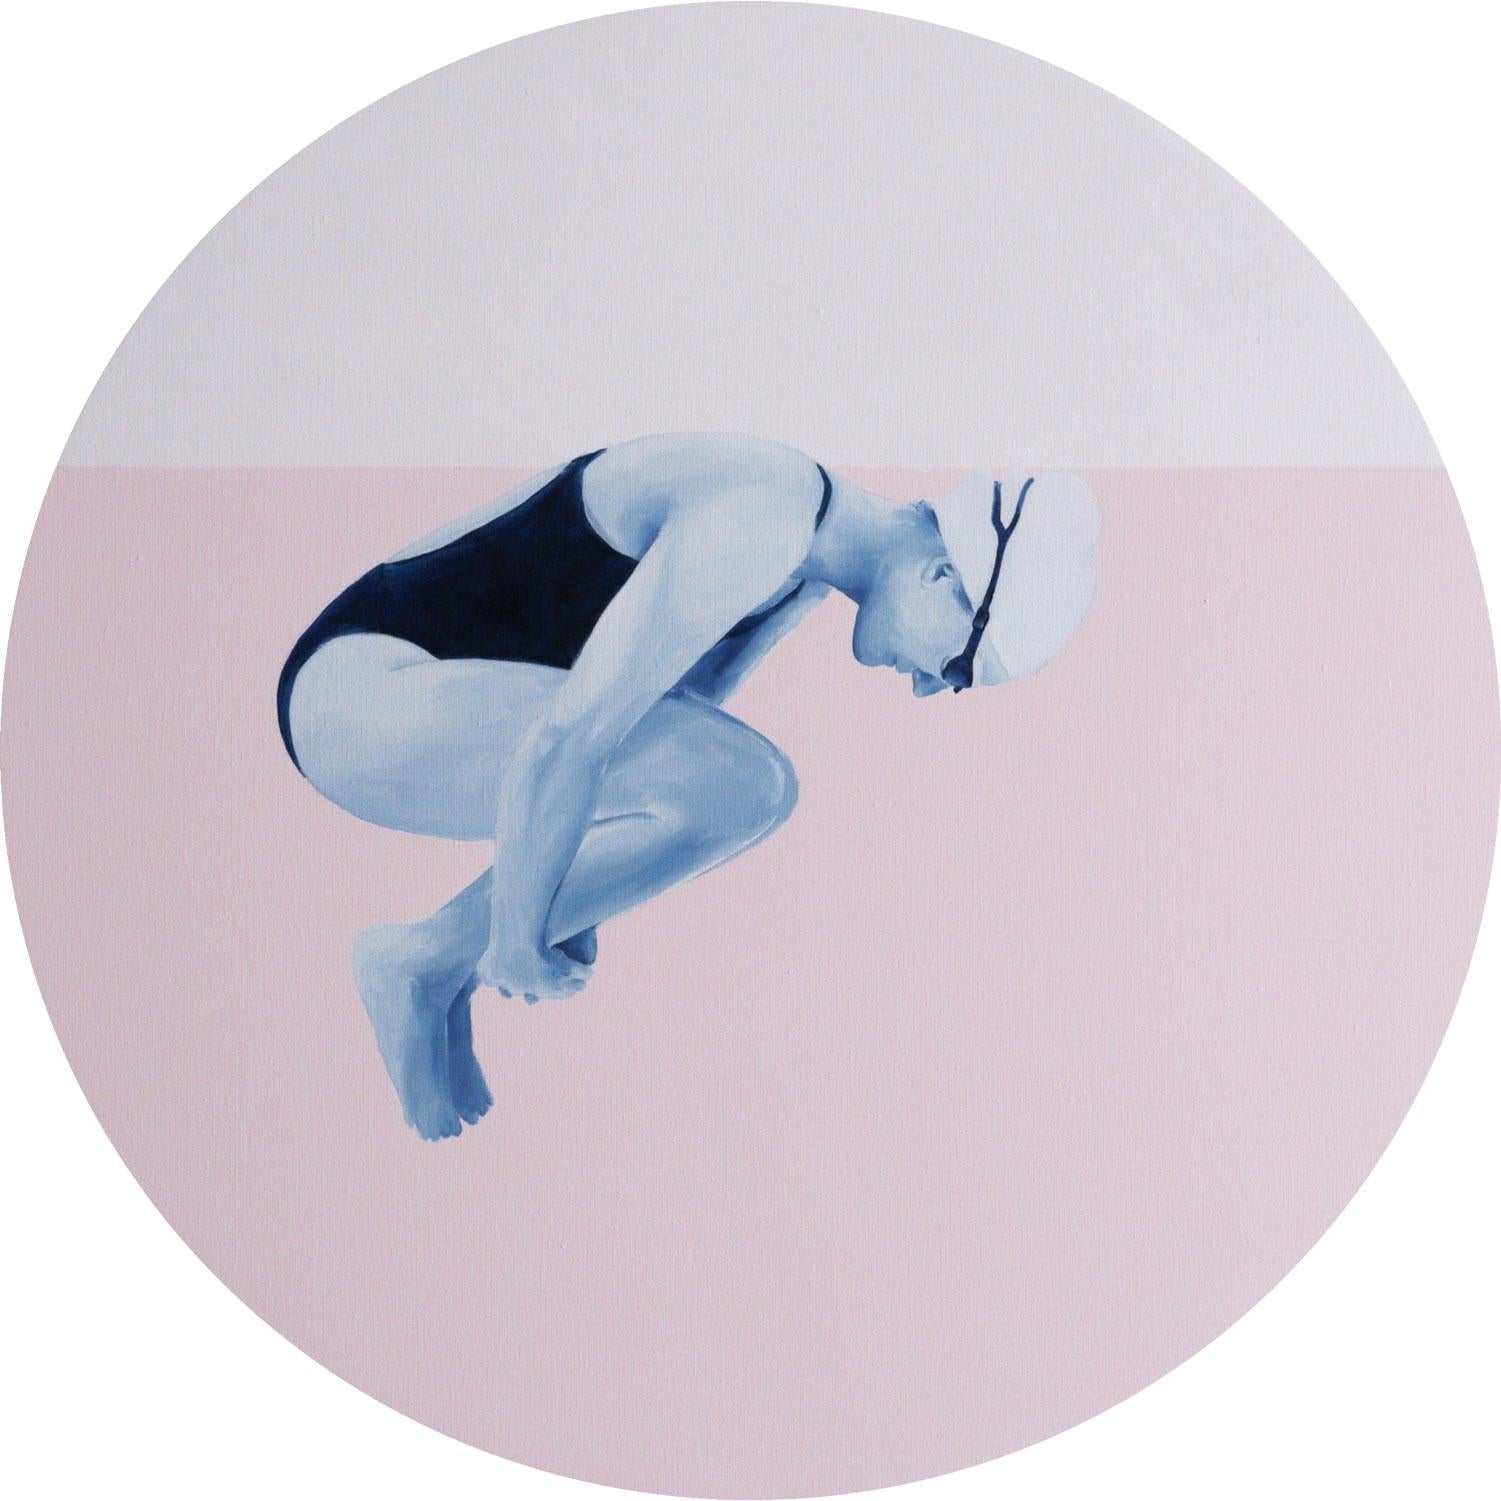 Ana Patitu Figurative Painting - Floating in pink I - figurative painting, landscape painting